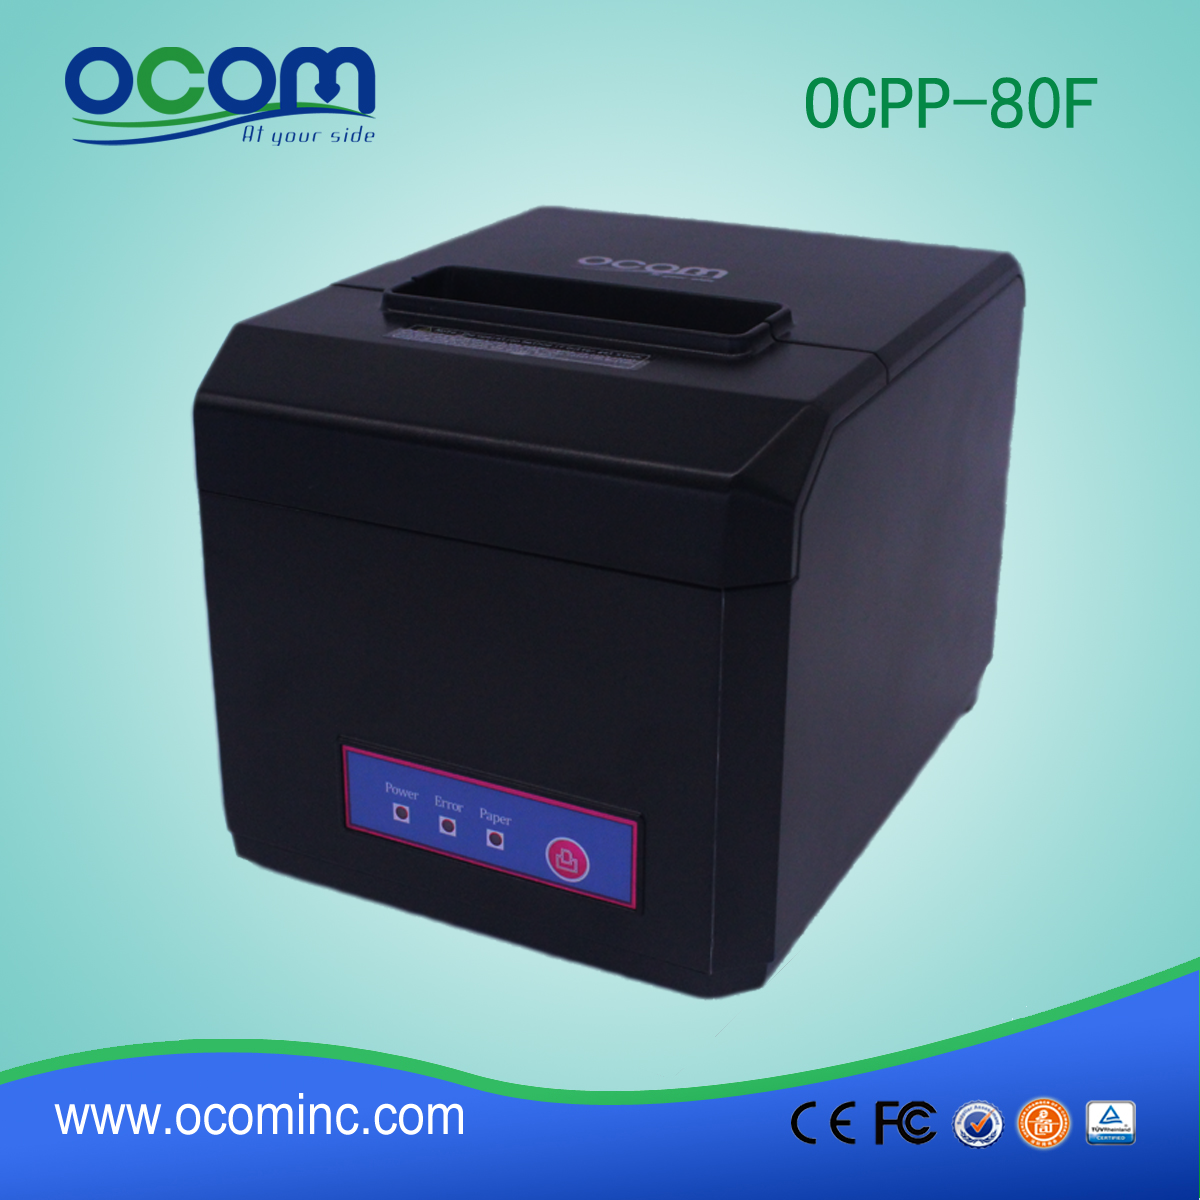 OCPP -80F POS热敏收据打印机可同时兼容58和80的纸